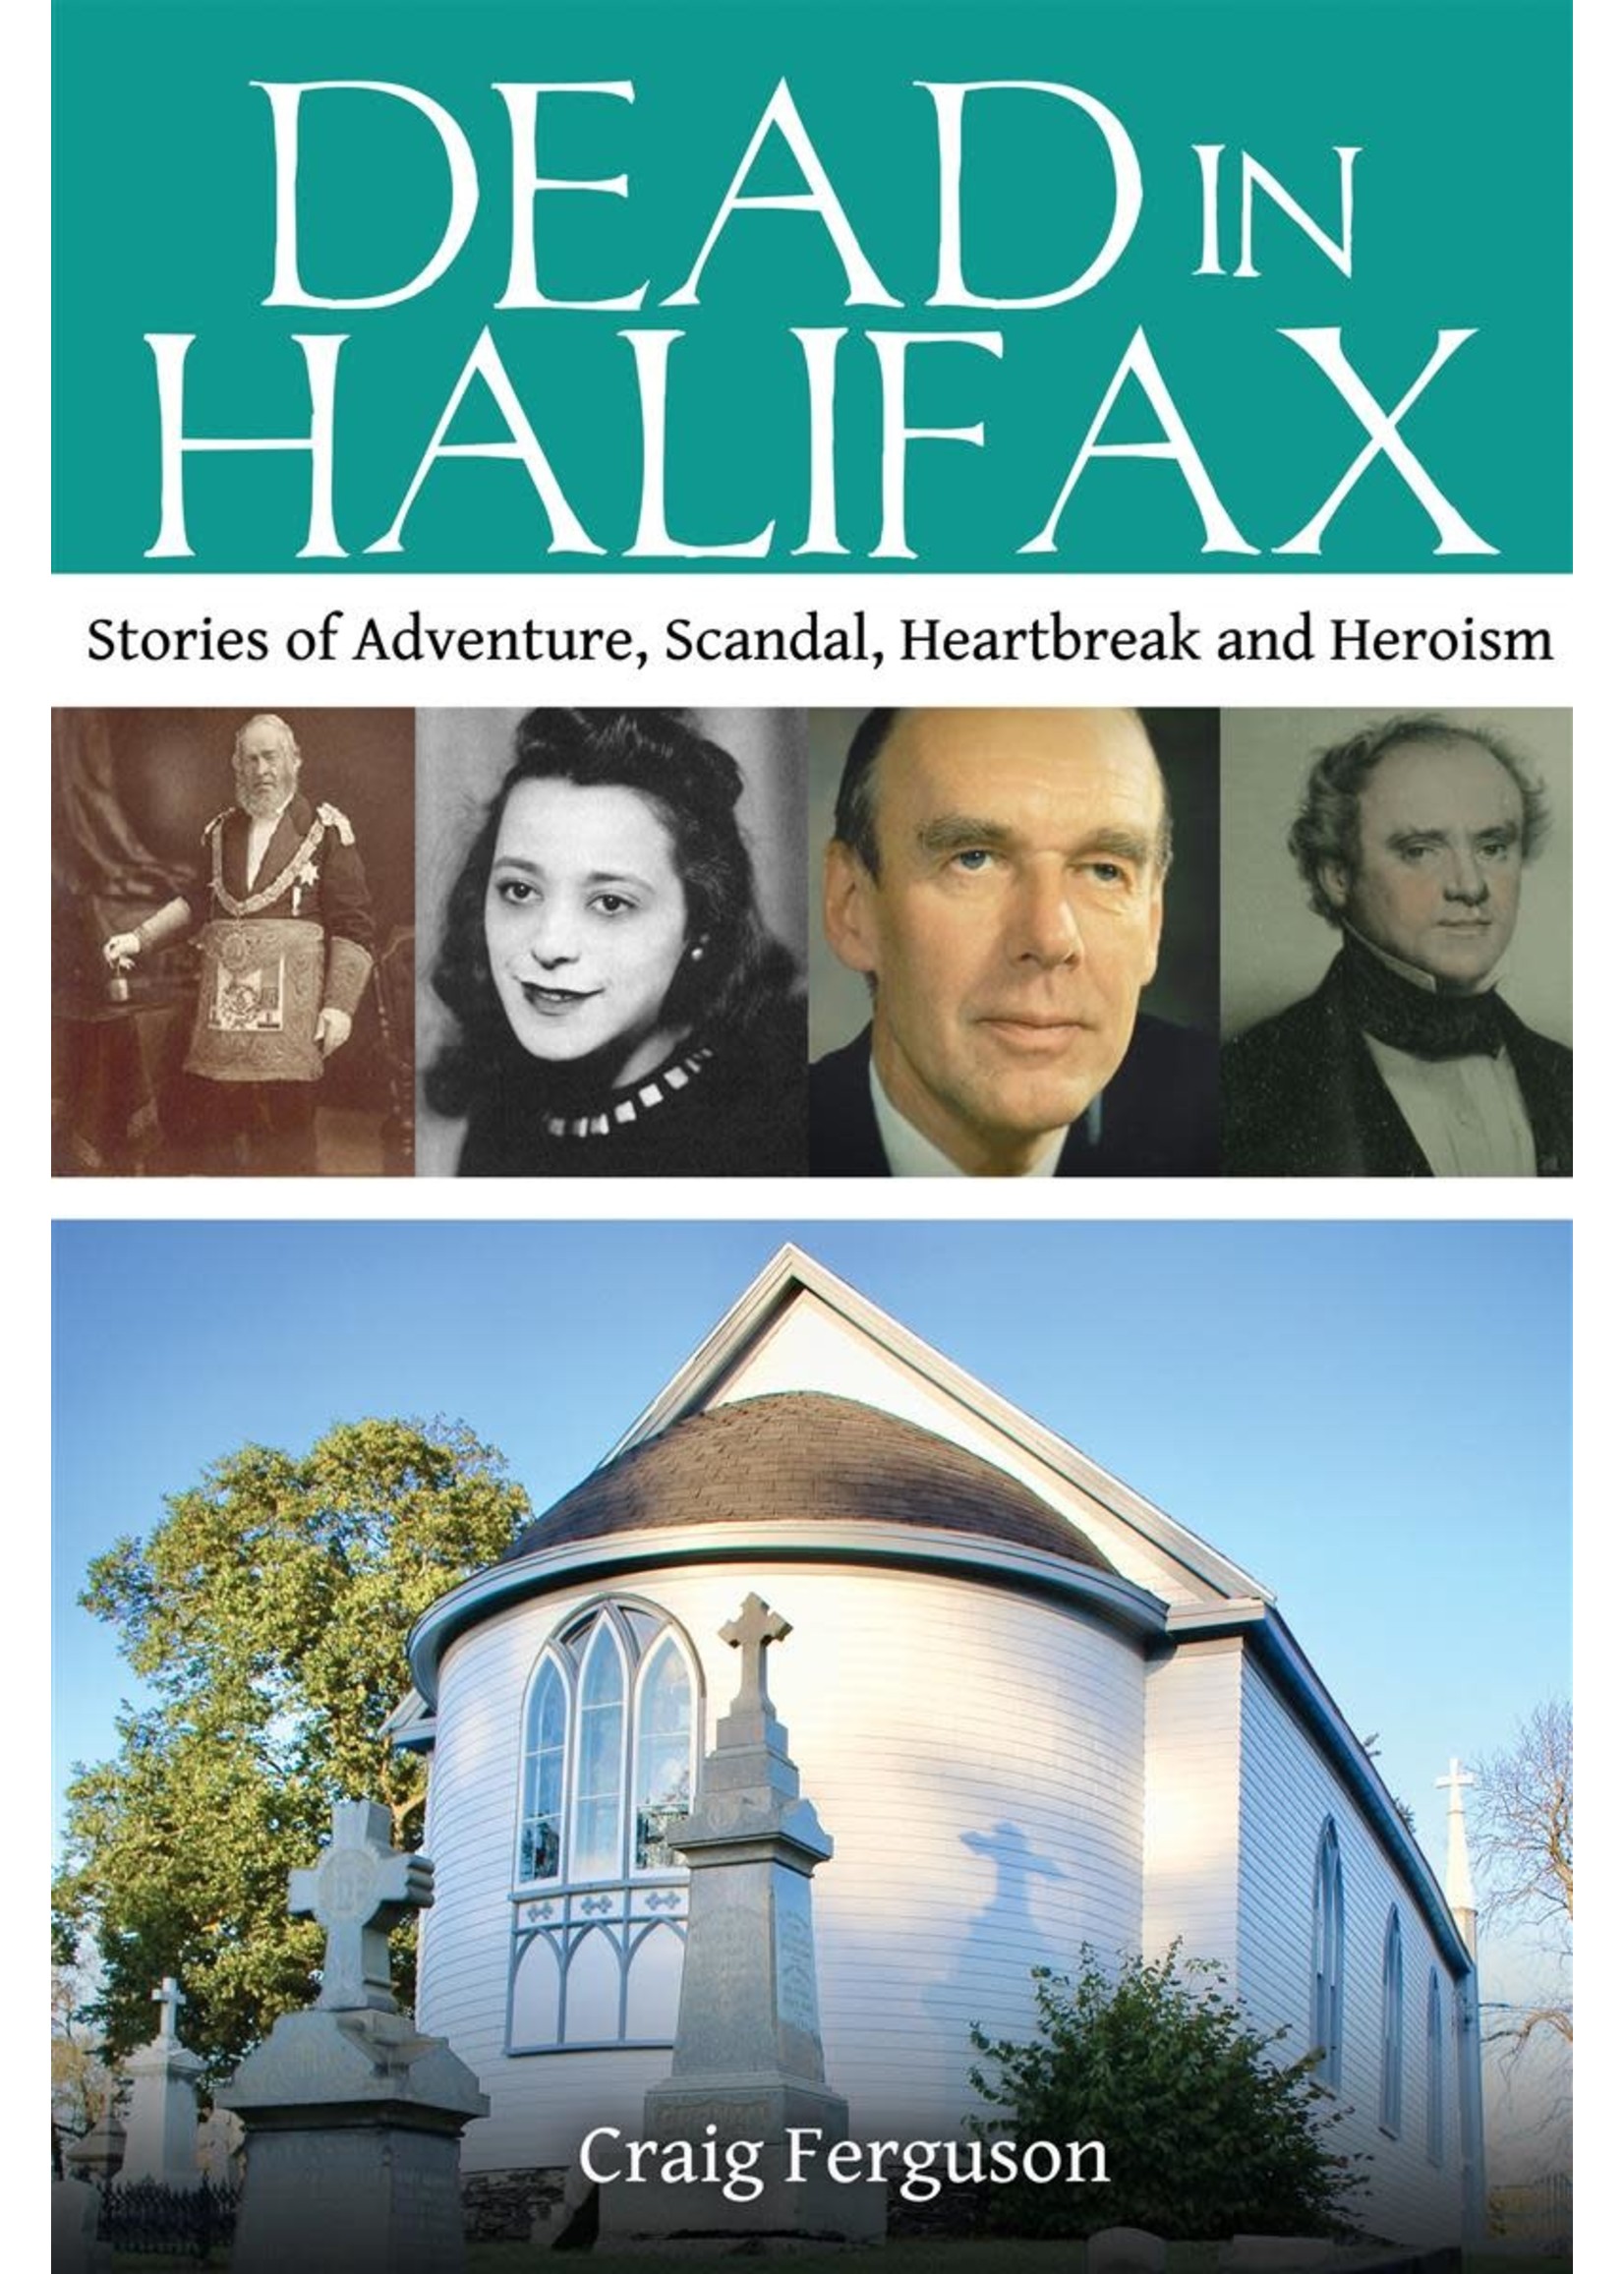 Dead in Halifax: Stories of Adventure, Scandal, Heartbreak and Heroism by Craig Ferguson